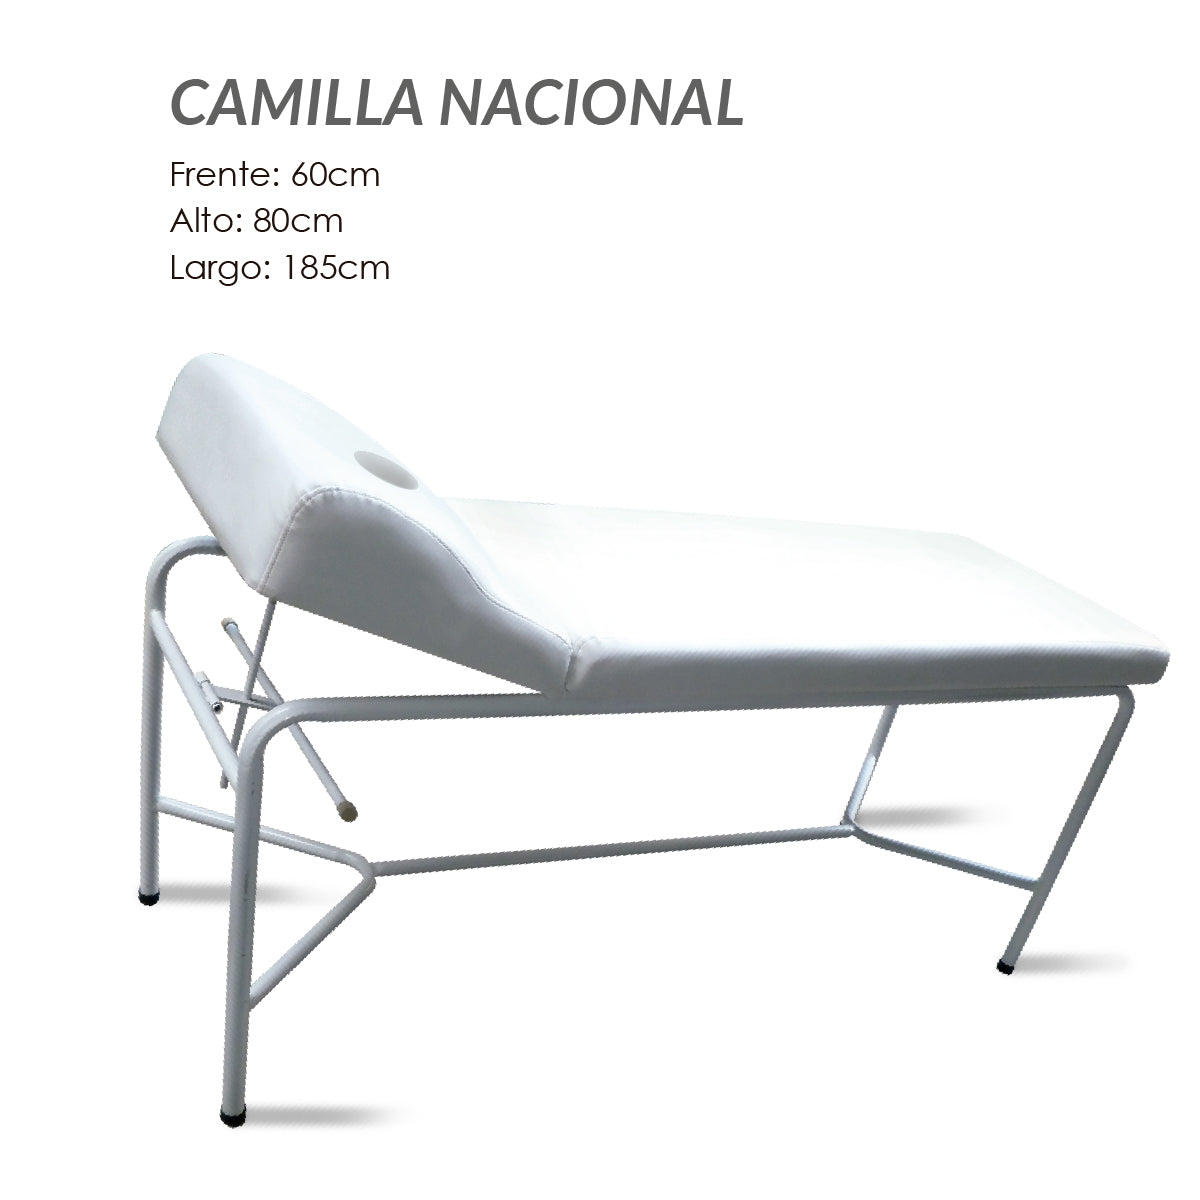 Camilla Nacional